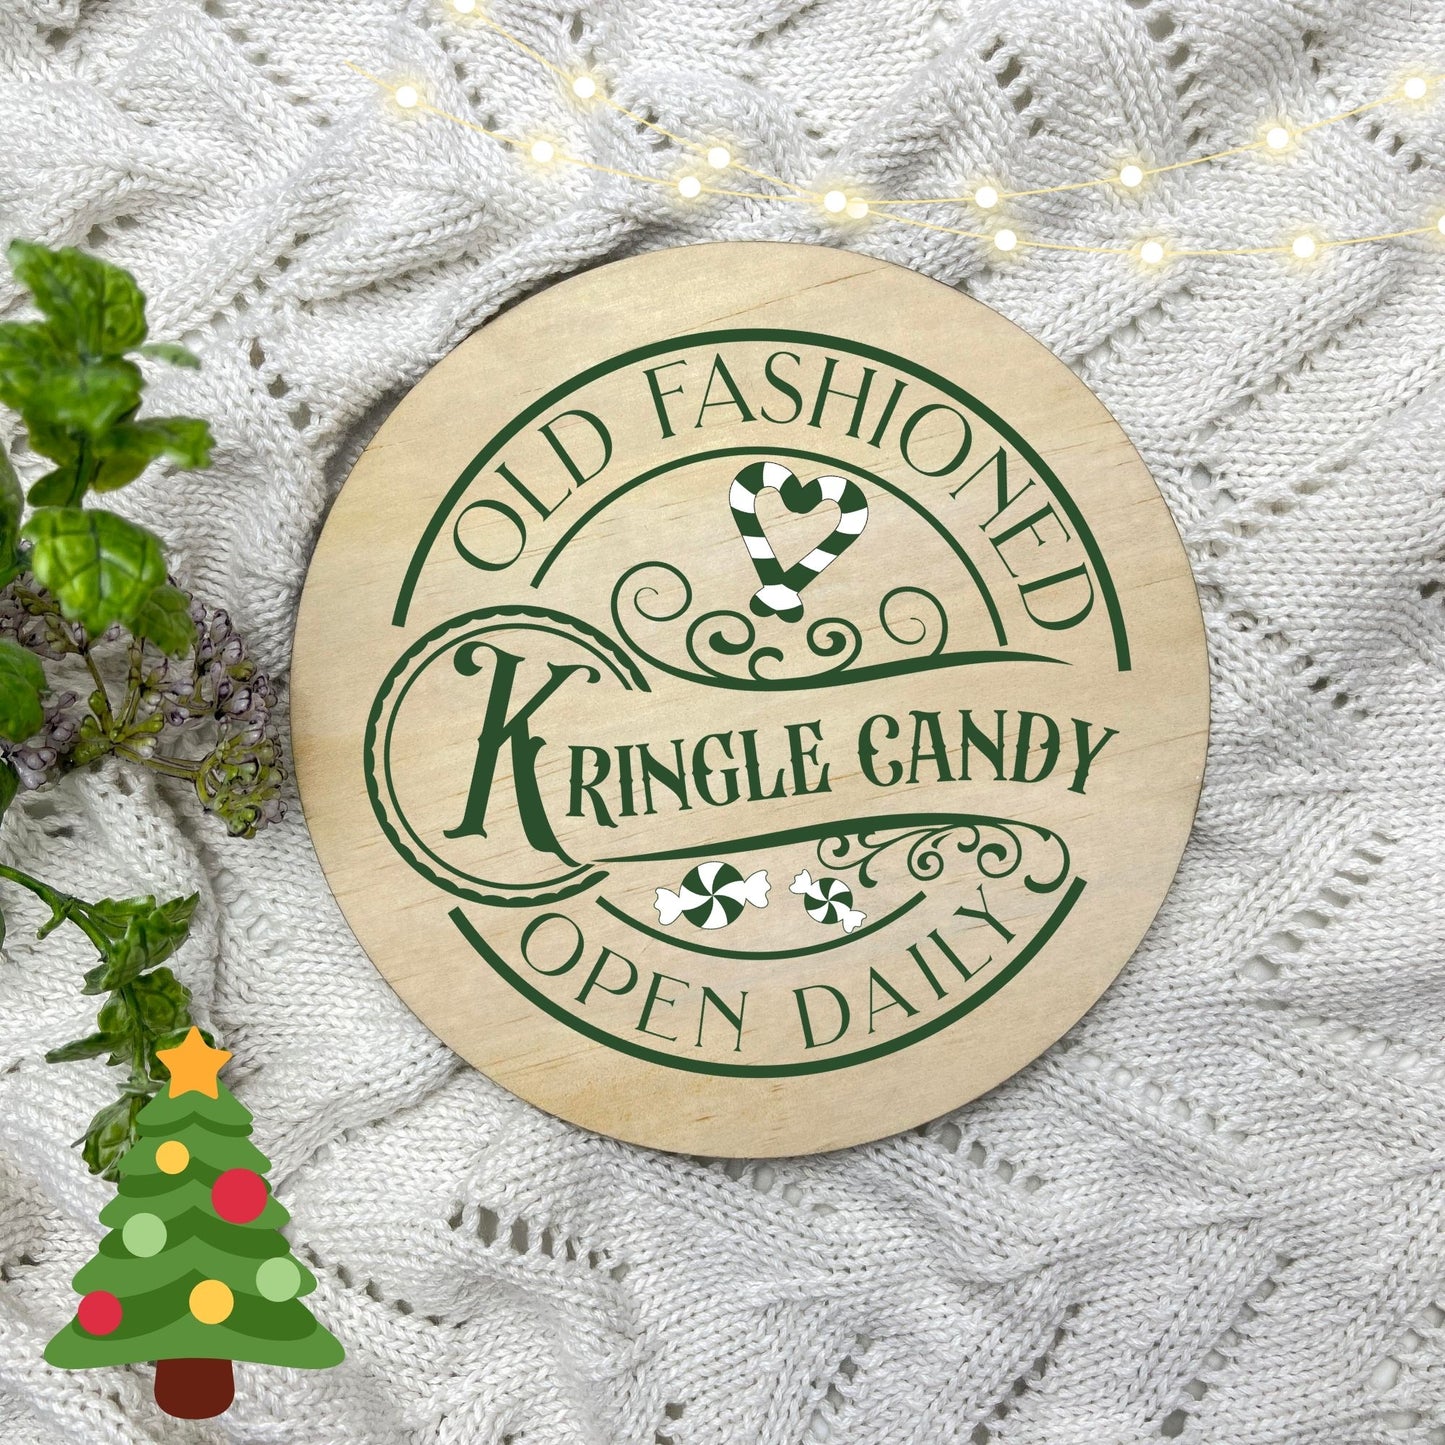 Old Fashioned Kringle Candy Sign, Seasonal Decor, Holidays decor, Christmas Decor, festive decorations c15